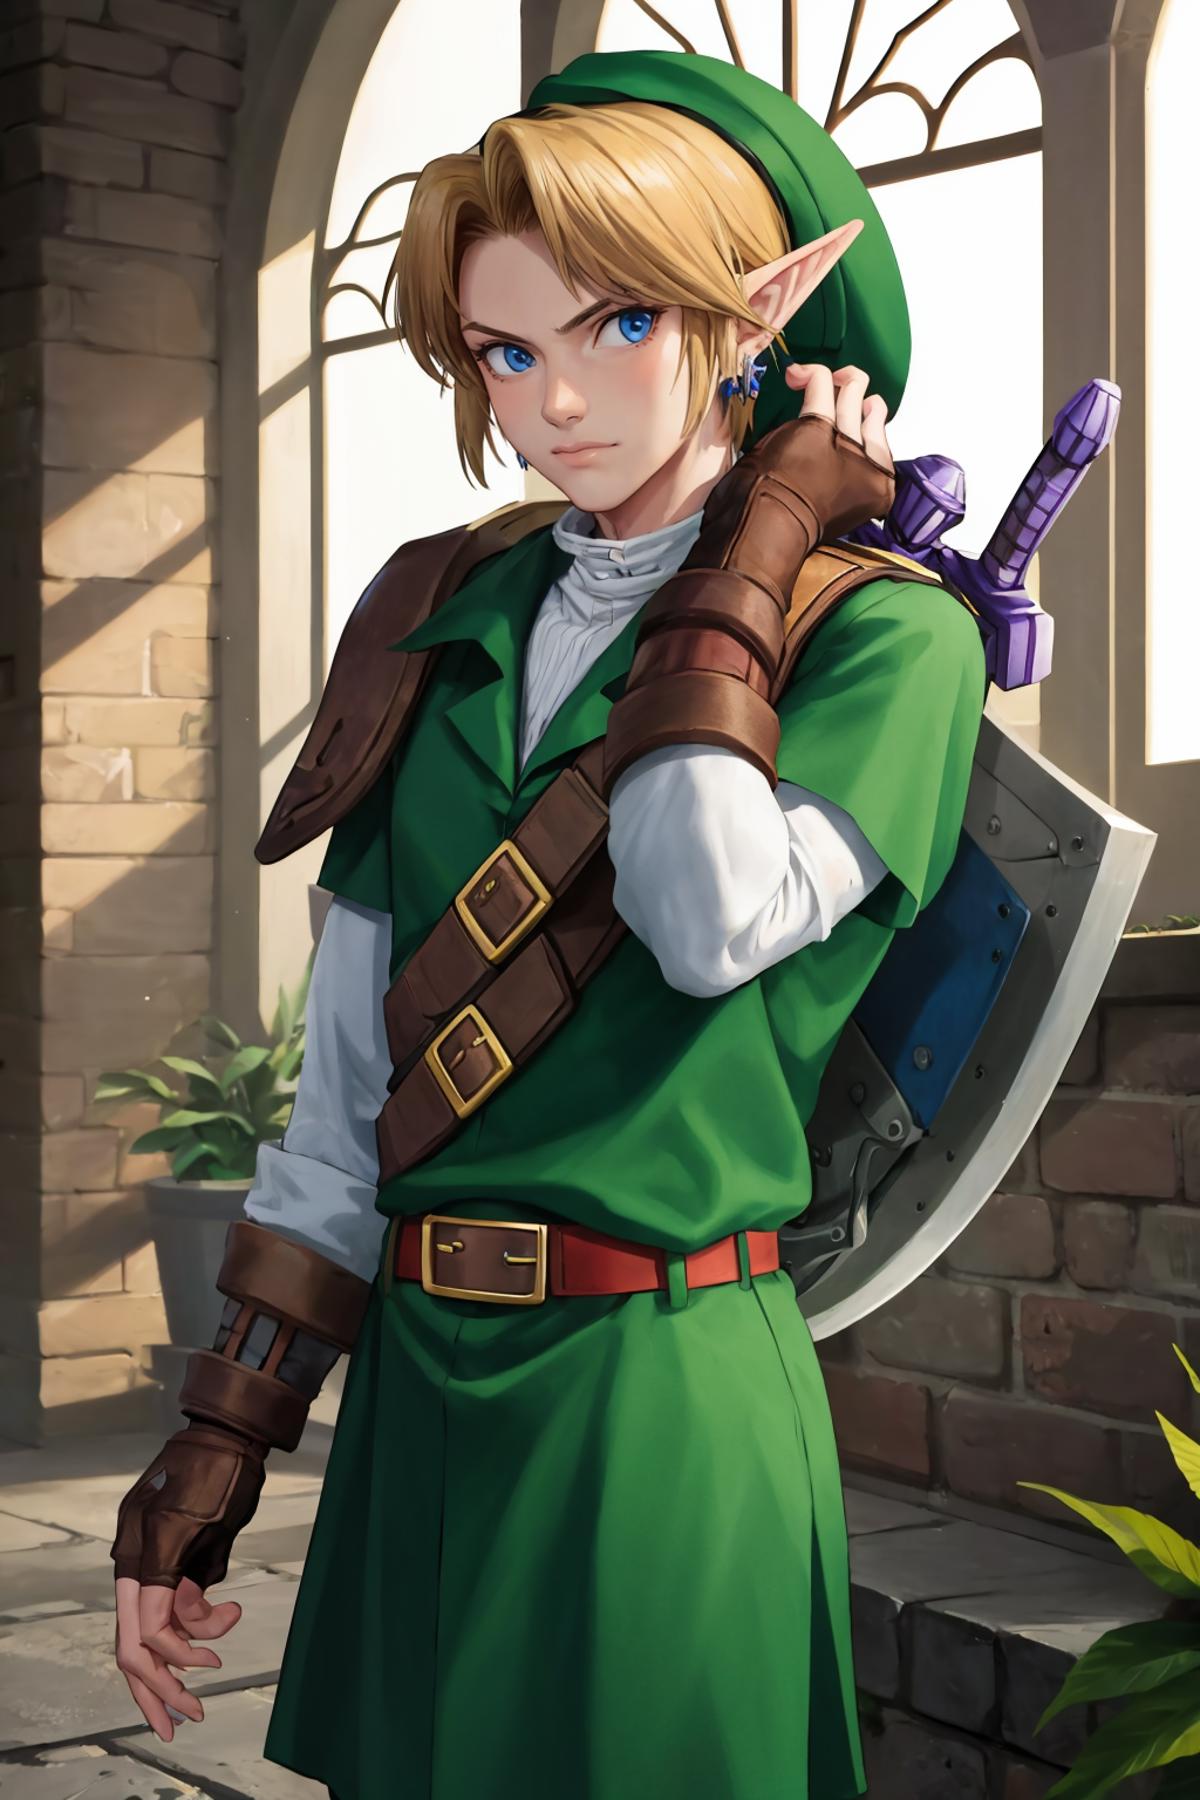 Link (The Legend of Zelda: Ocarina of Time) LoRA image by richyrich515